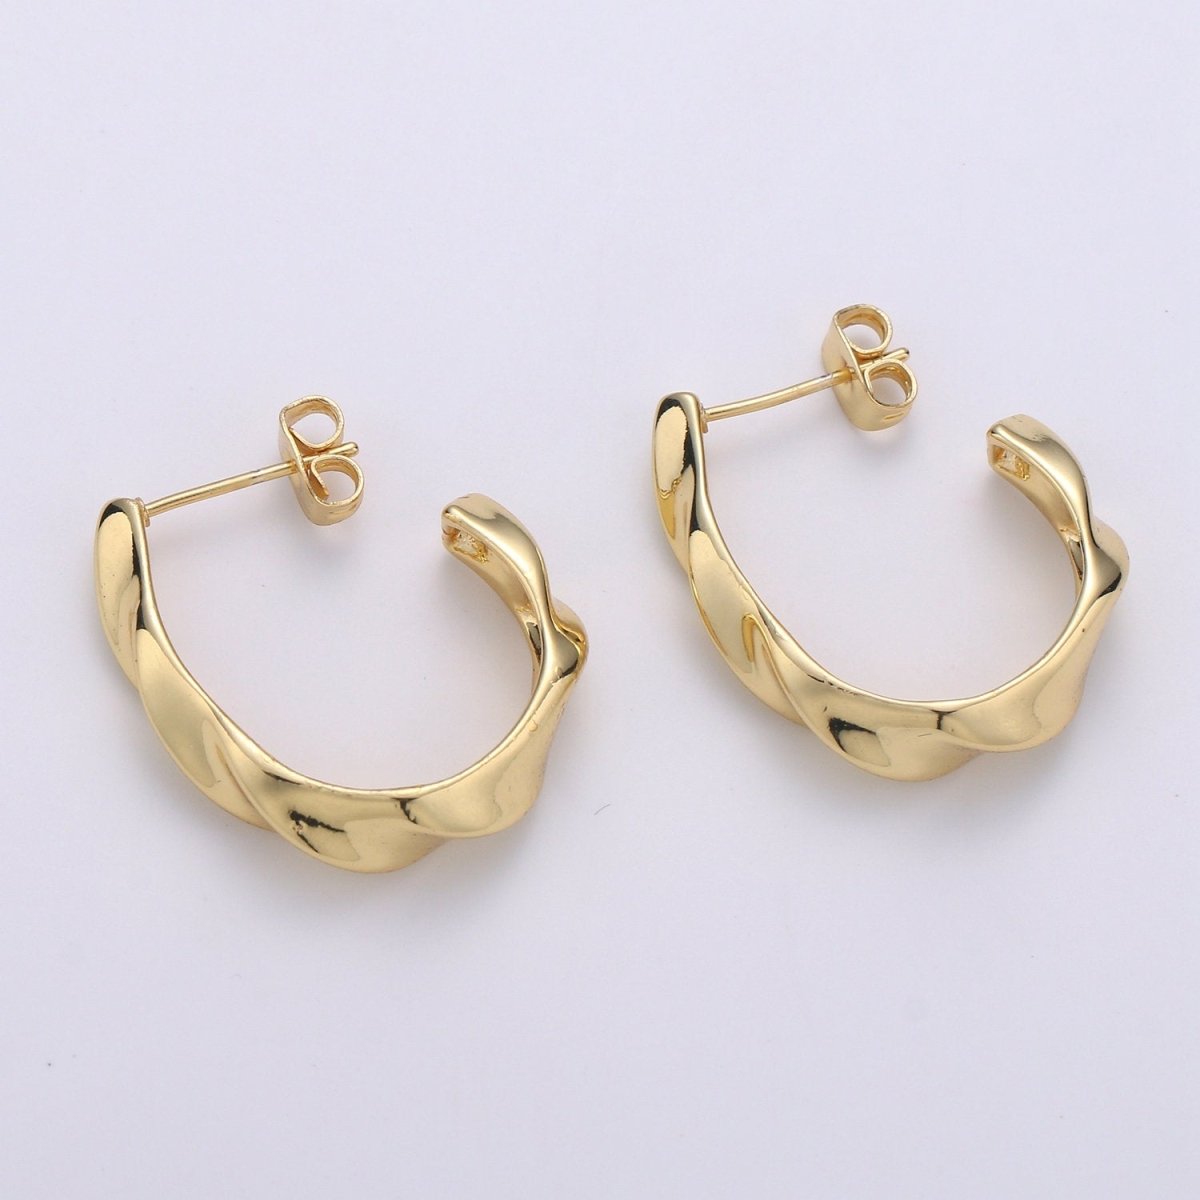 14k Gold Filled Circular Hoop Earring, Earring Supplies for DIY Earring Jewelry, Earring Supply DIY Findings, Perfect for DIY Earrings Q-240 - DLUXCA